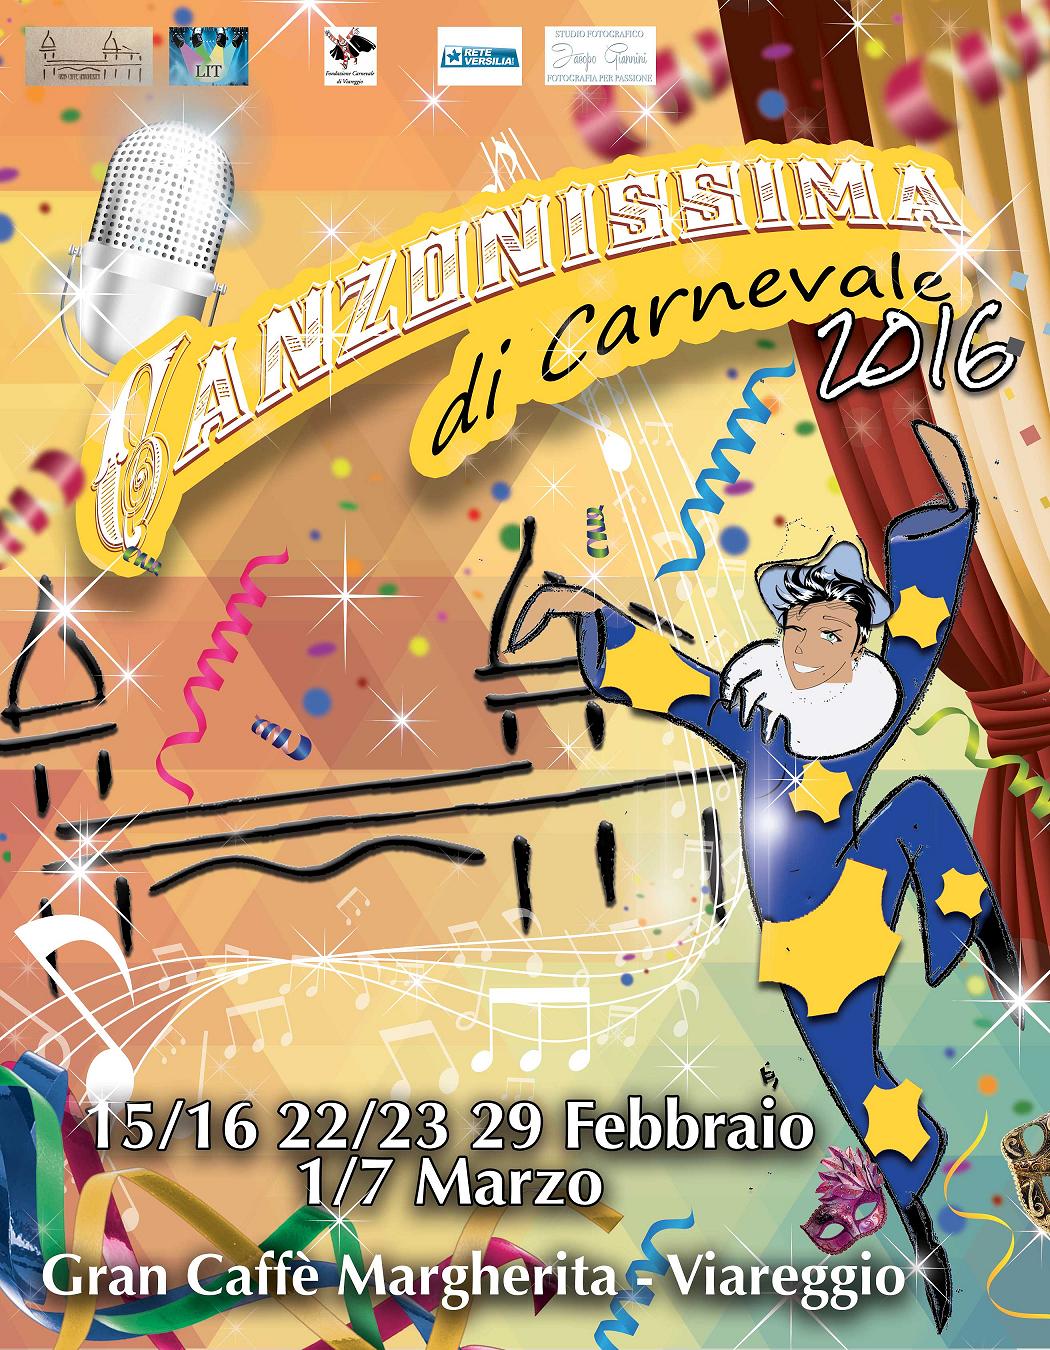 Locandina Canzonissima di Carnevale 2016